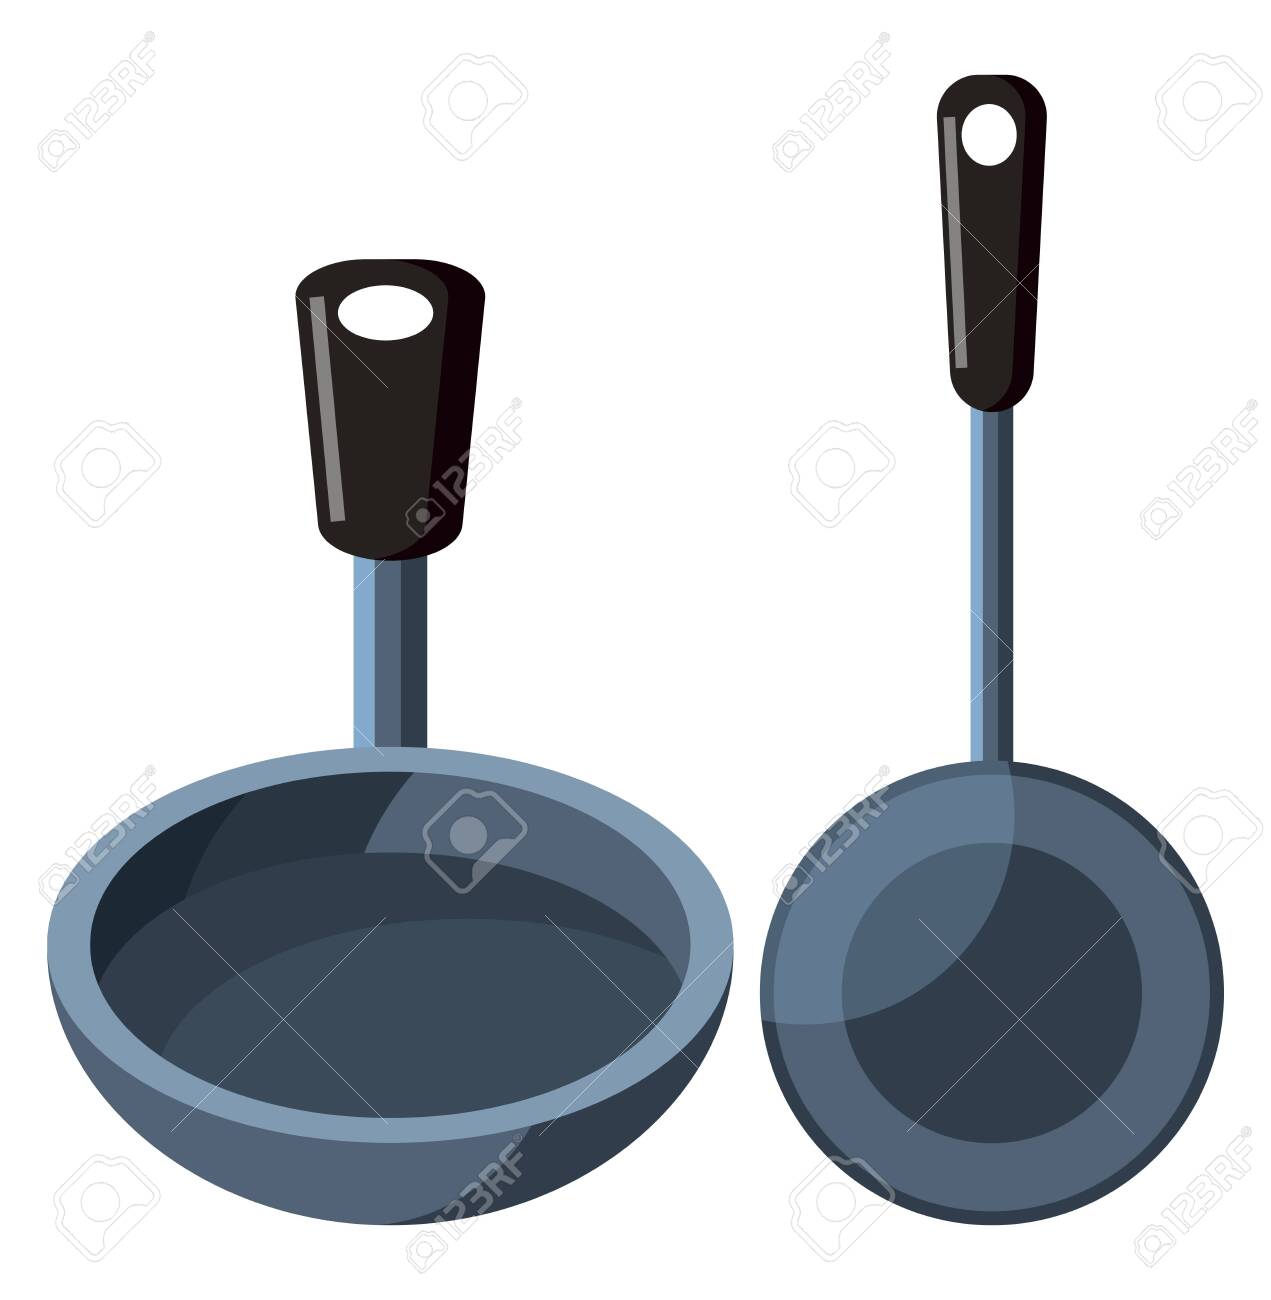 Change your Frying Pan..!